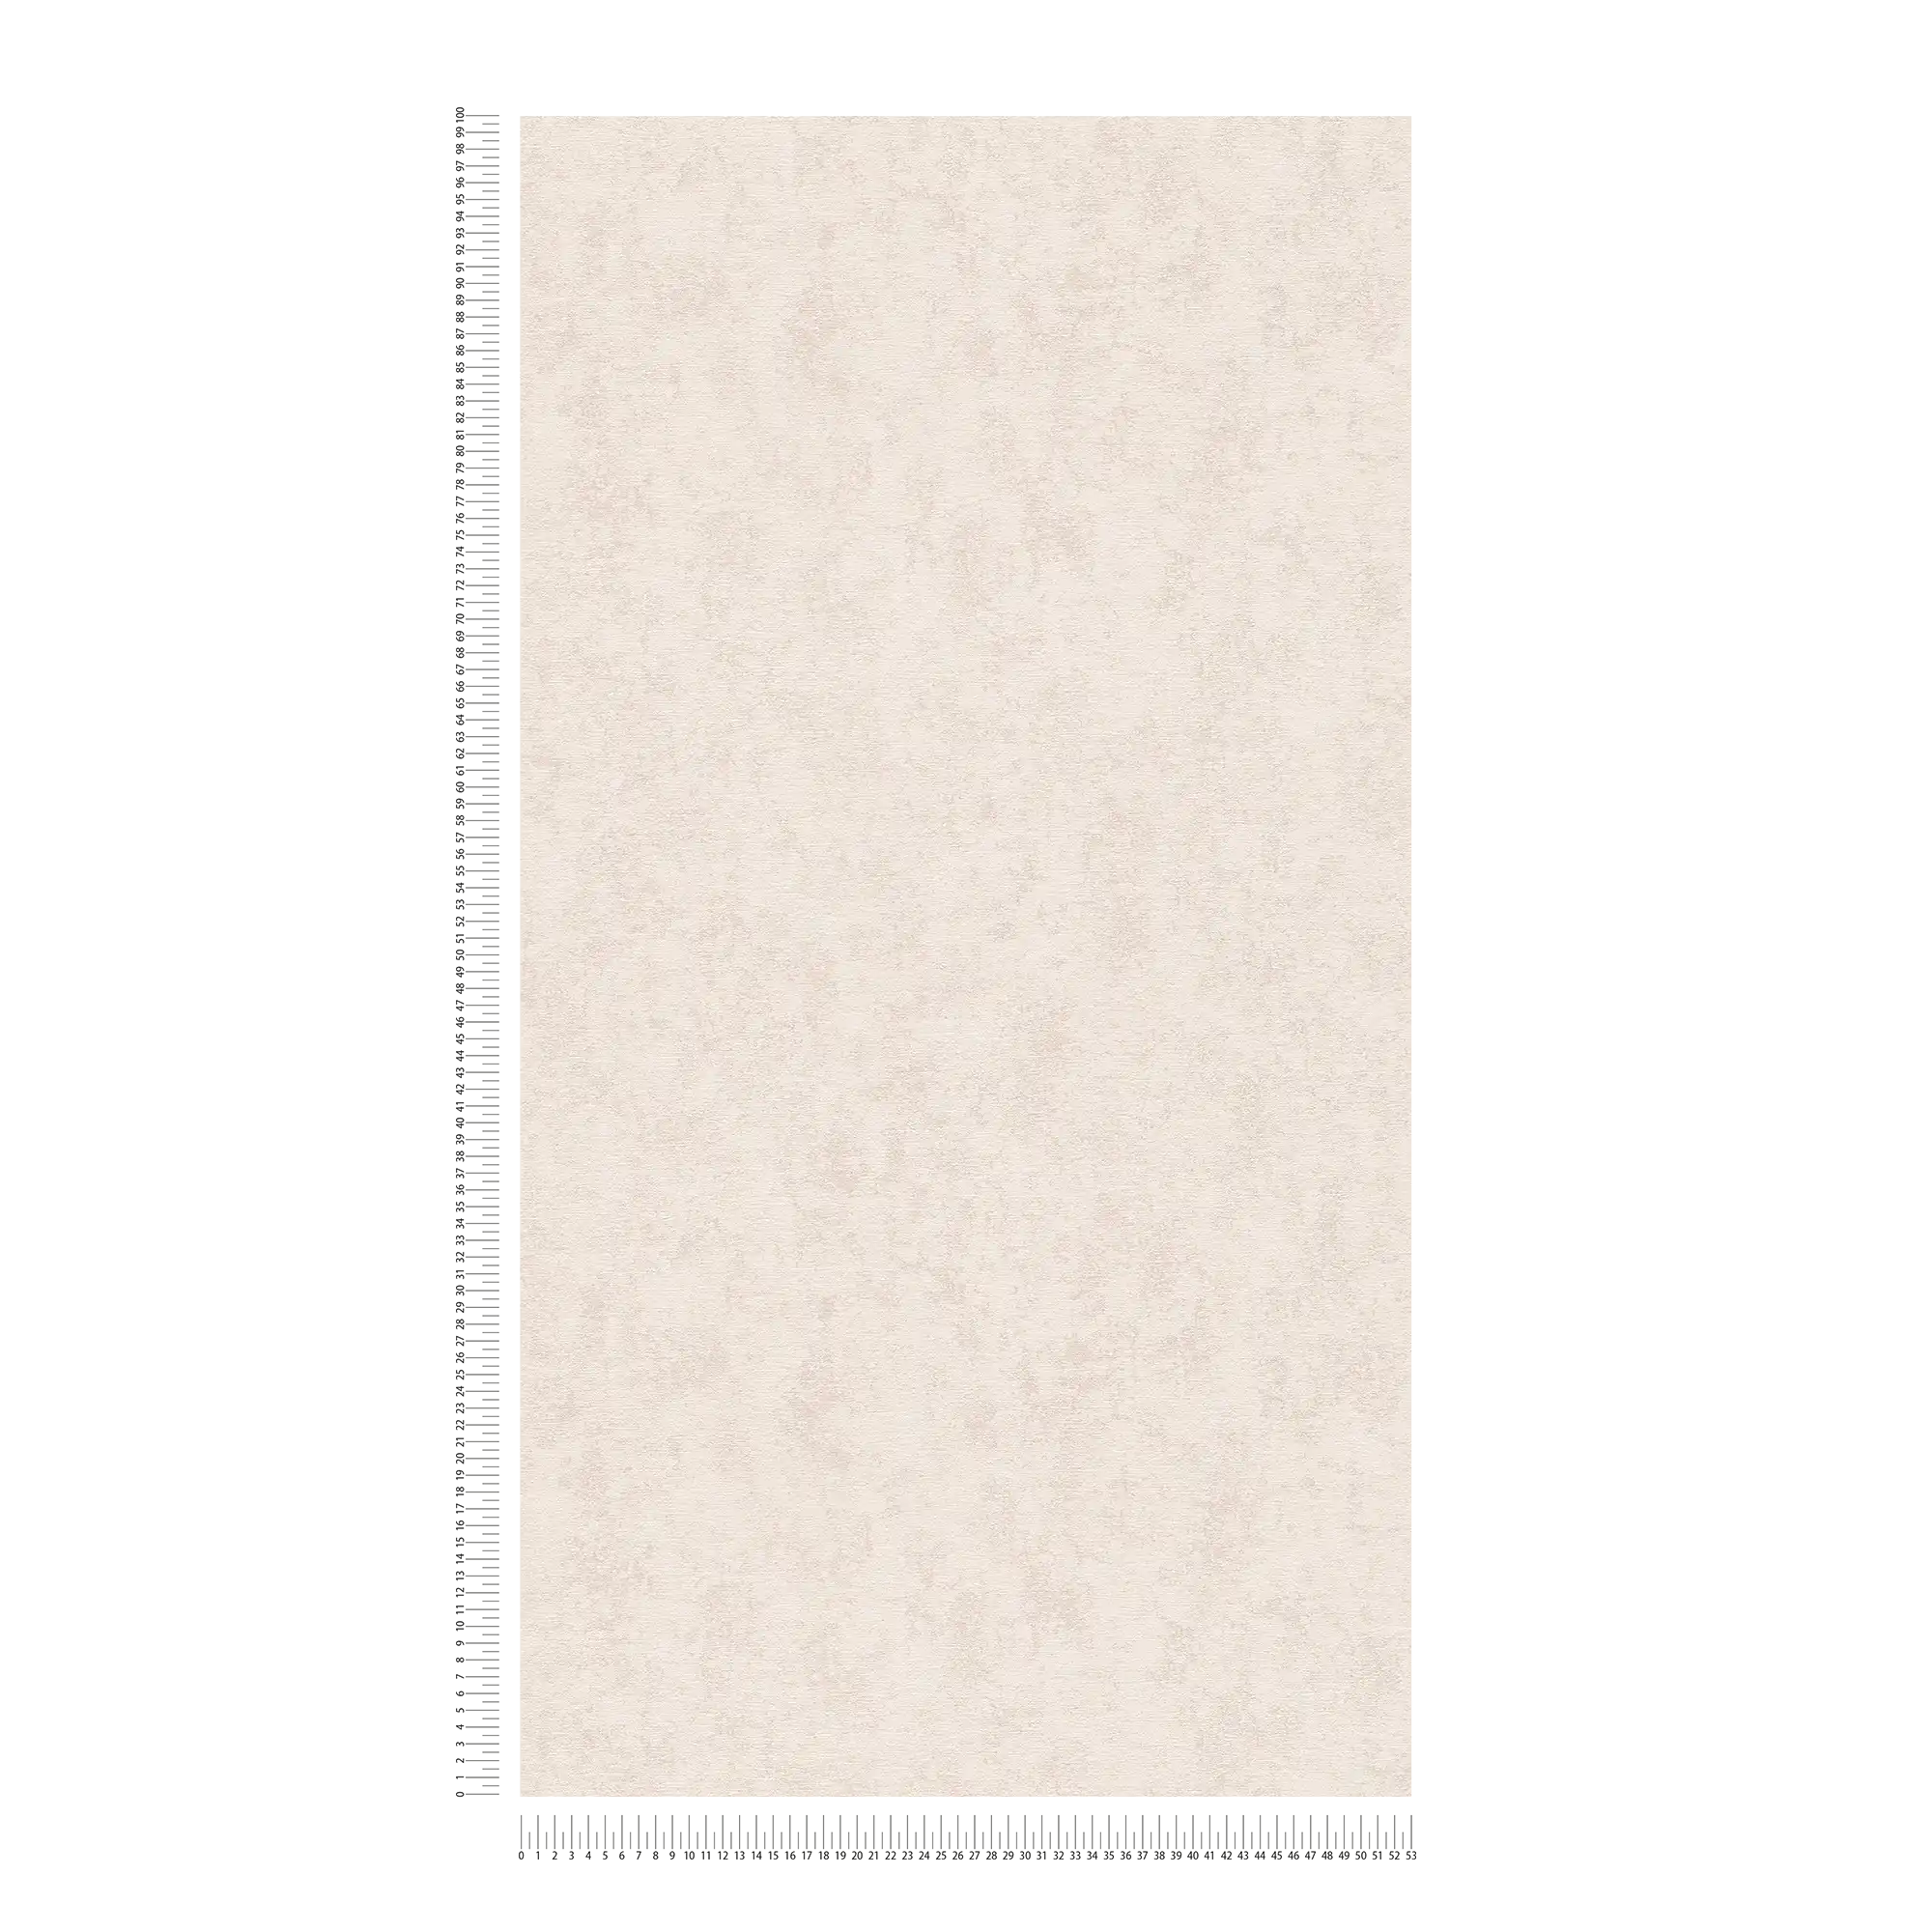             Carta da parati Plaster optics beige chiaro in stile scandi - beige, grigio
        